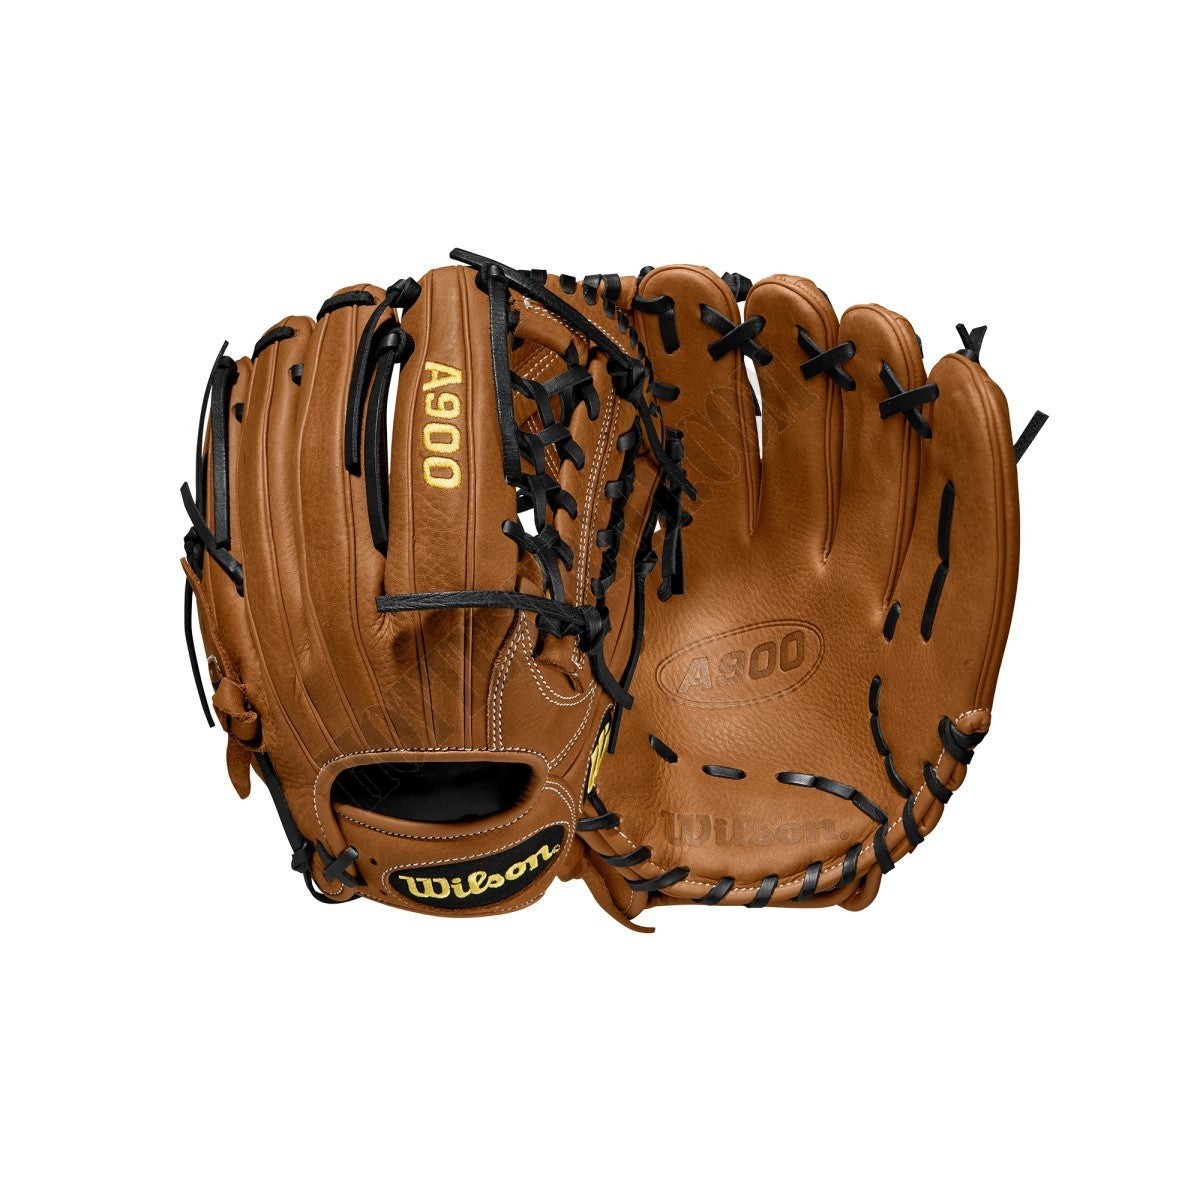 2020 A900 11.75" Baseball Glove ● Wilson Promotions - 2020 A900 11.75" Baseball Glove ● Wilson Promotions